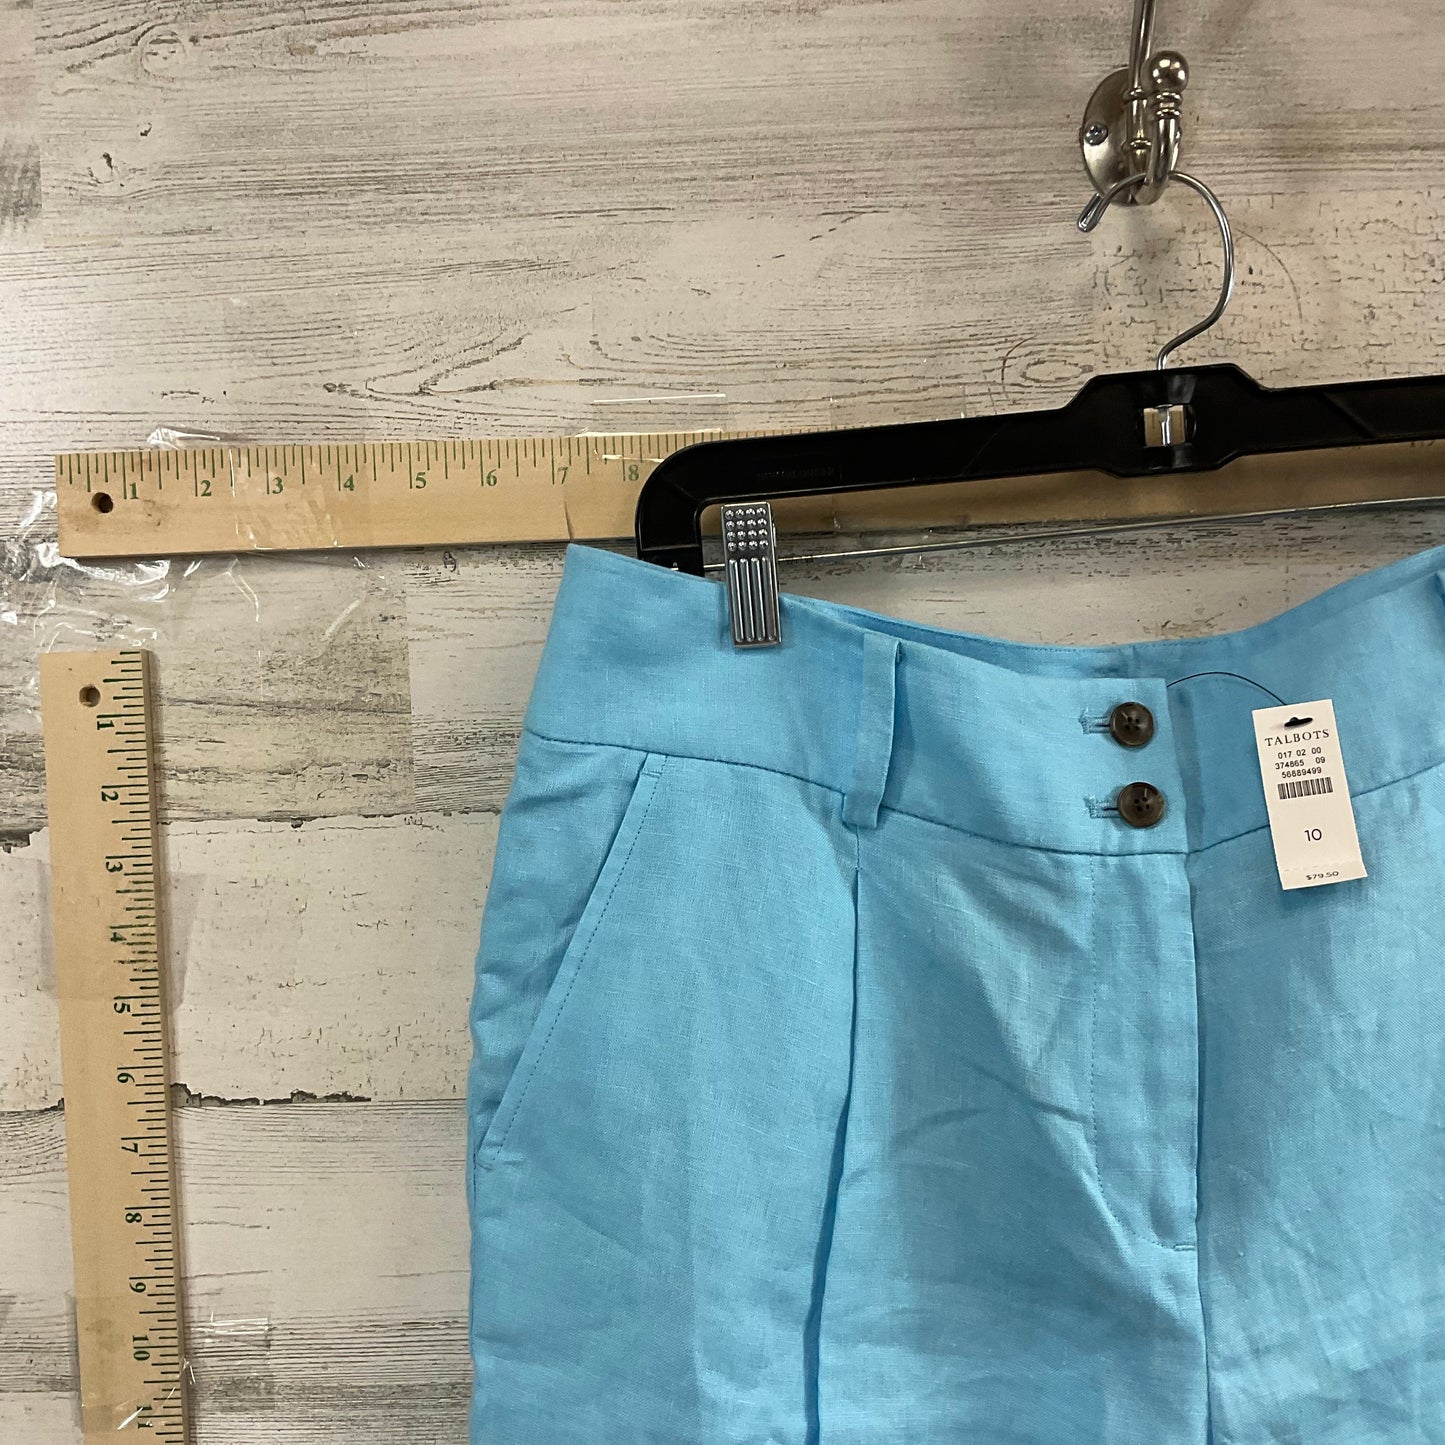 Blue Shorts Talbots, Size M